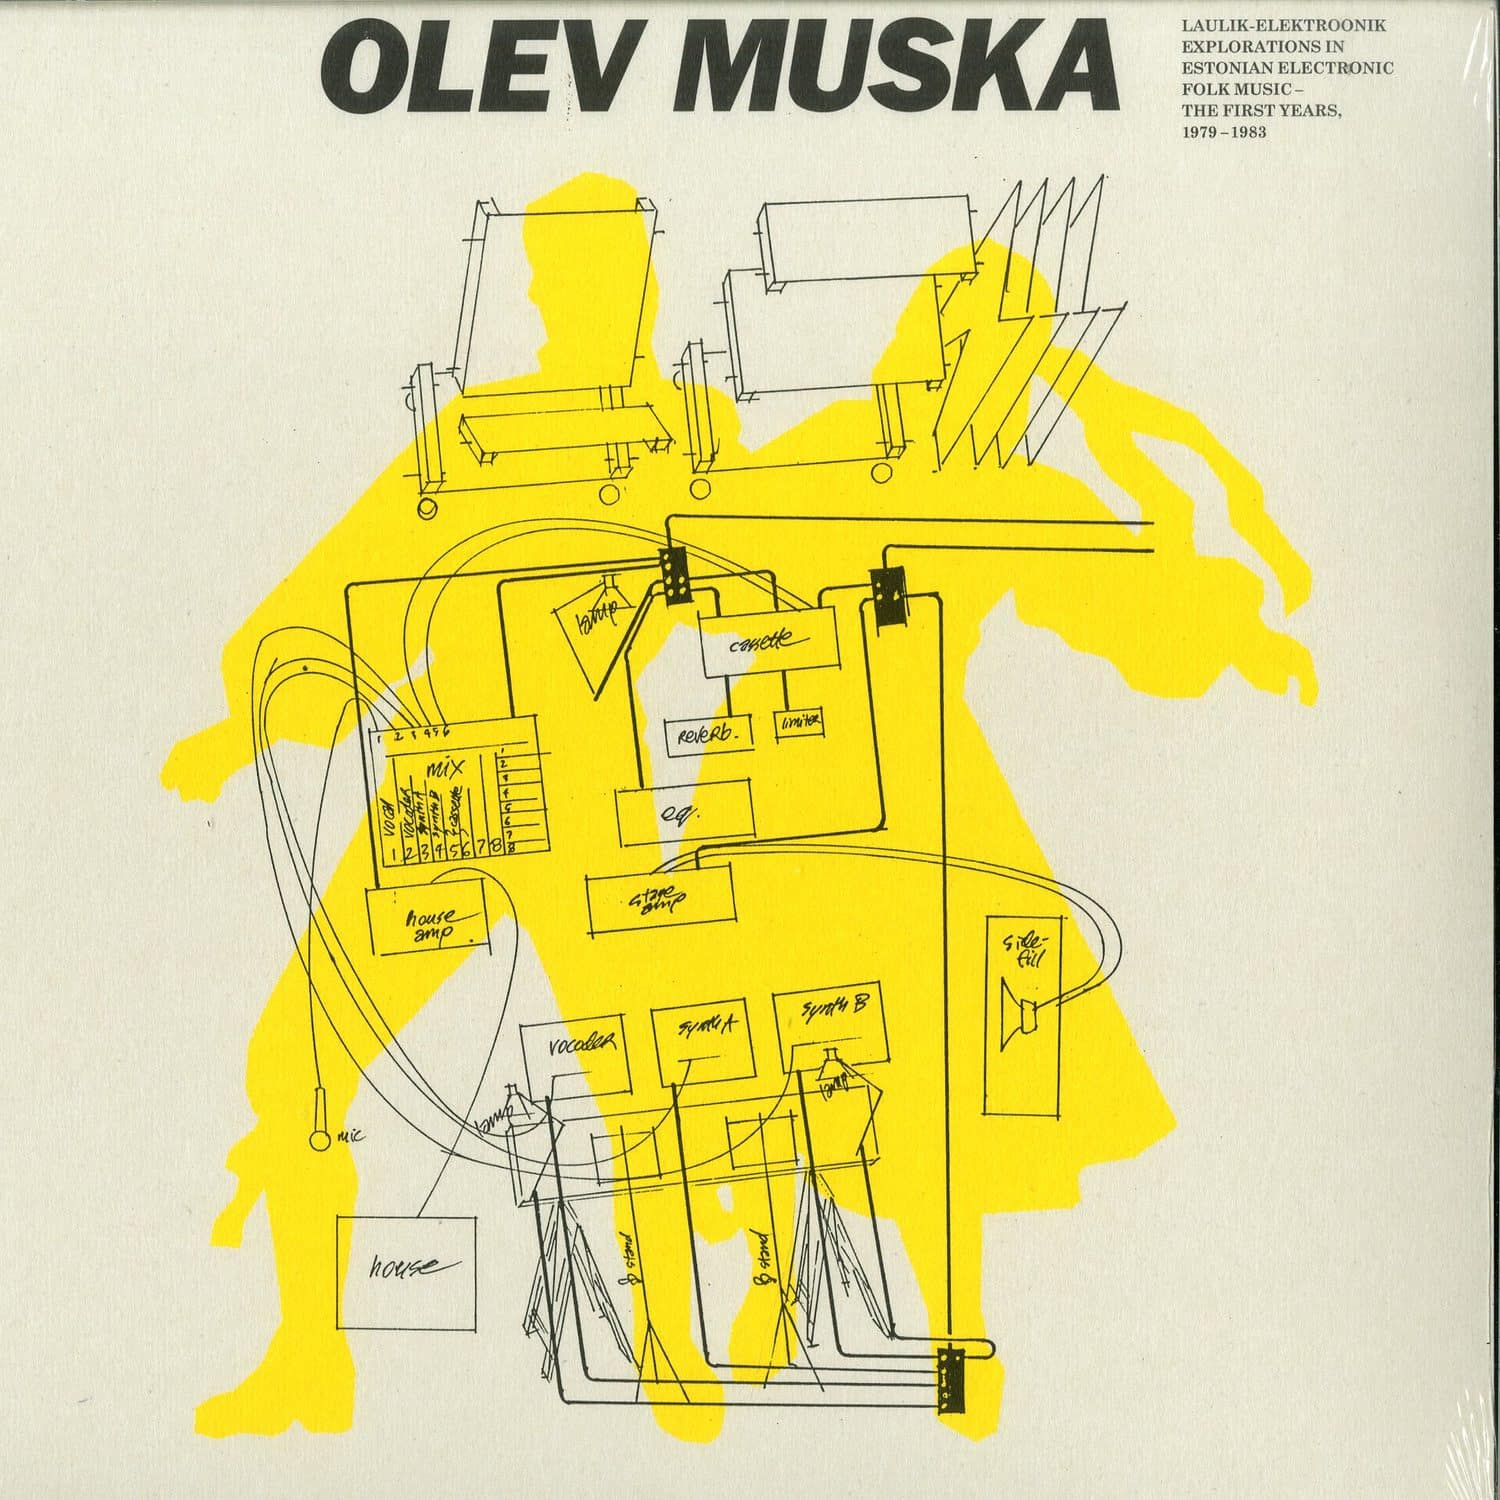 Olev Muska - LAULIK-ELEKTROONIK - EXPLORATIONS IN ESTONIAN ELECTRONIC FOLK MUSIC - THE FIRST YEARS, 1979-1983 